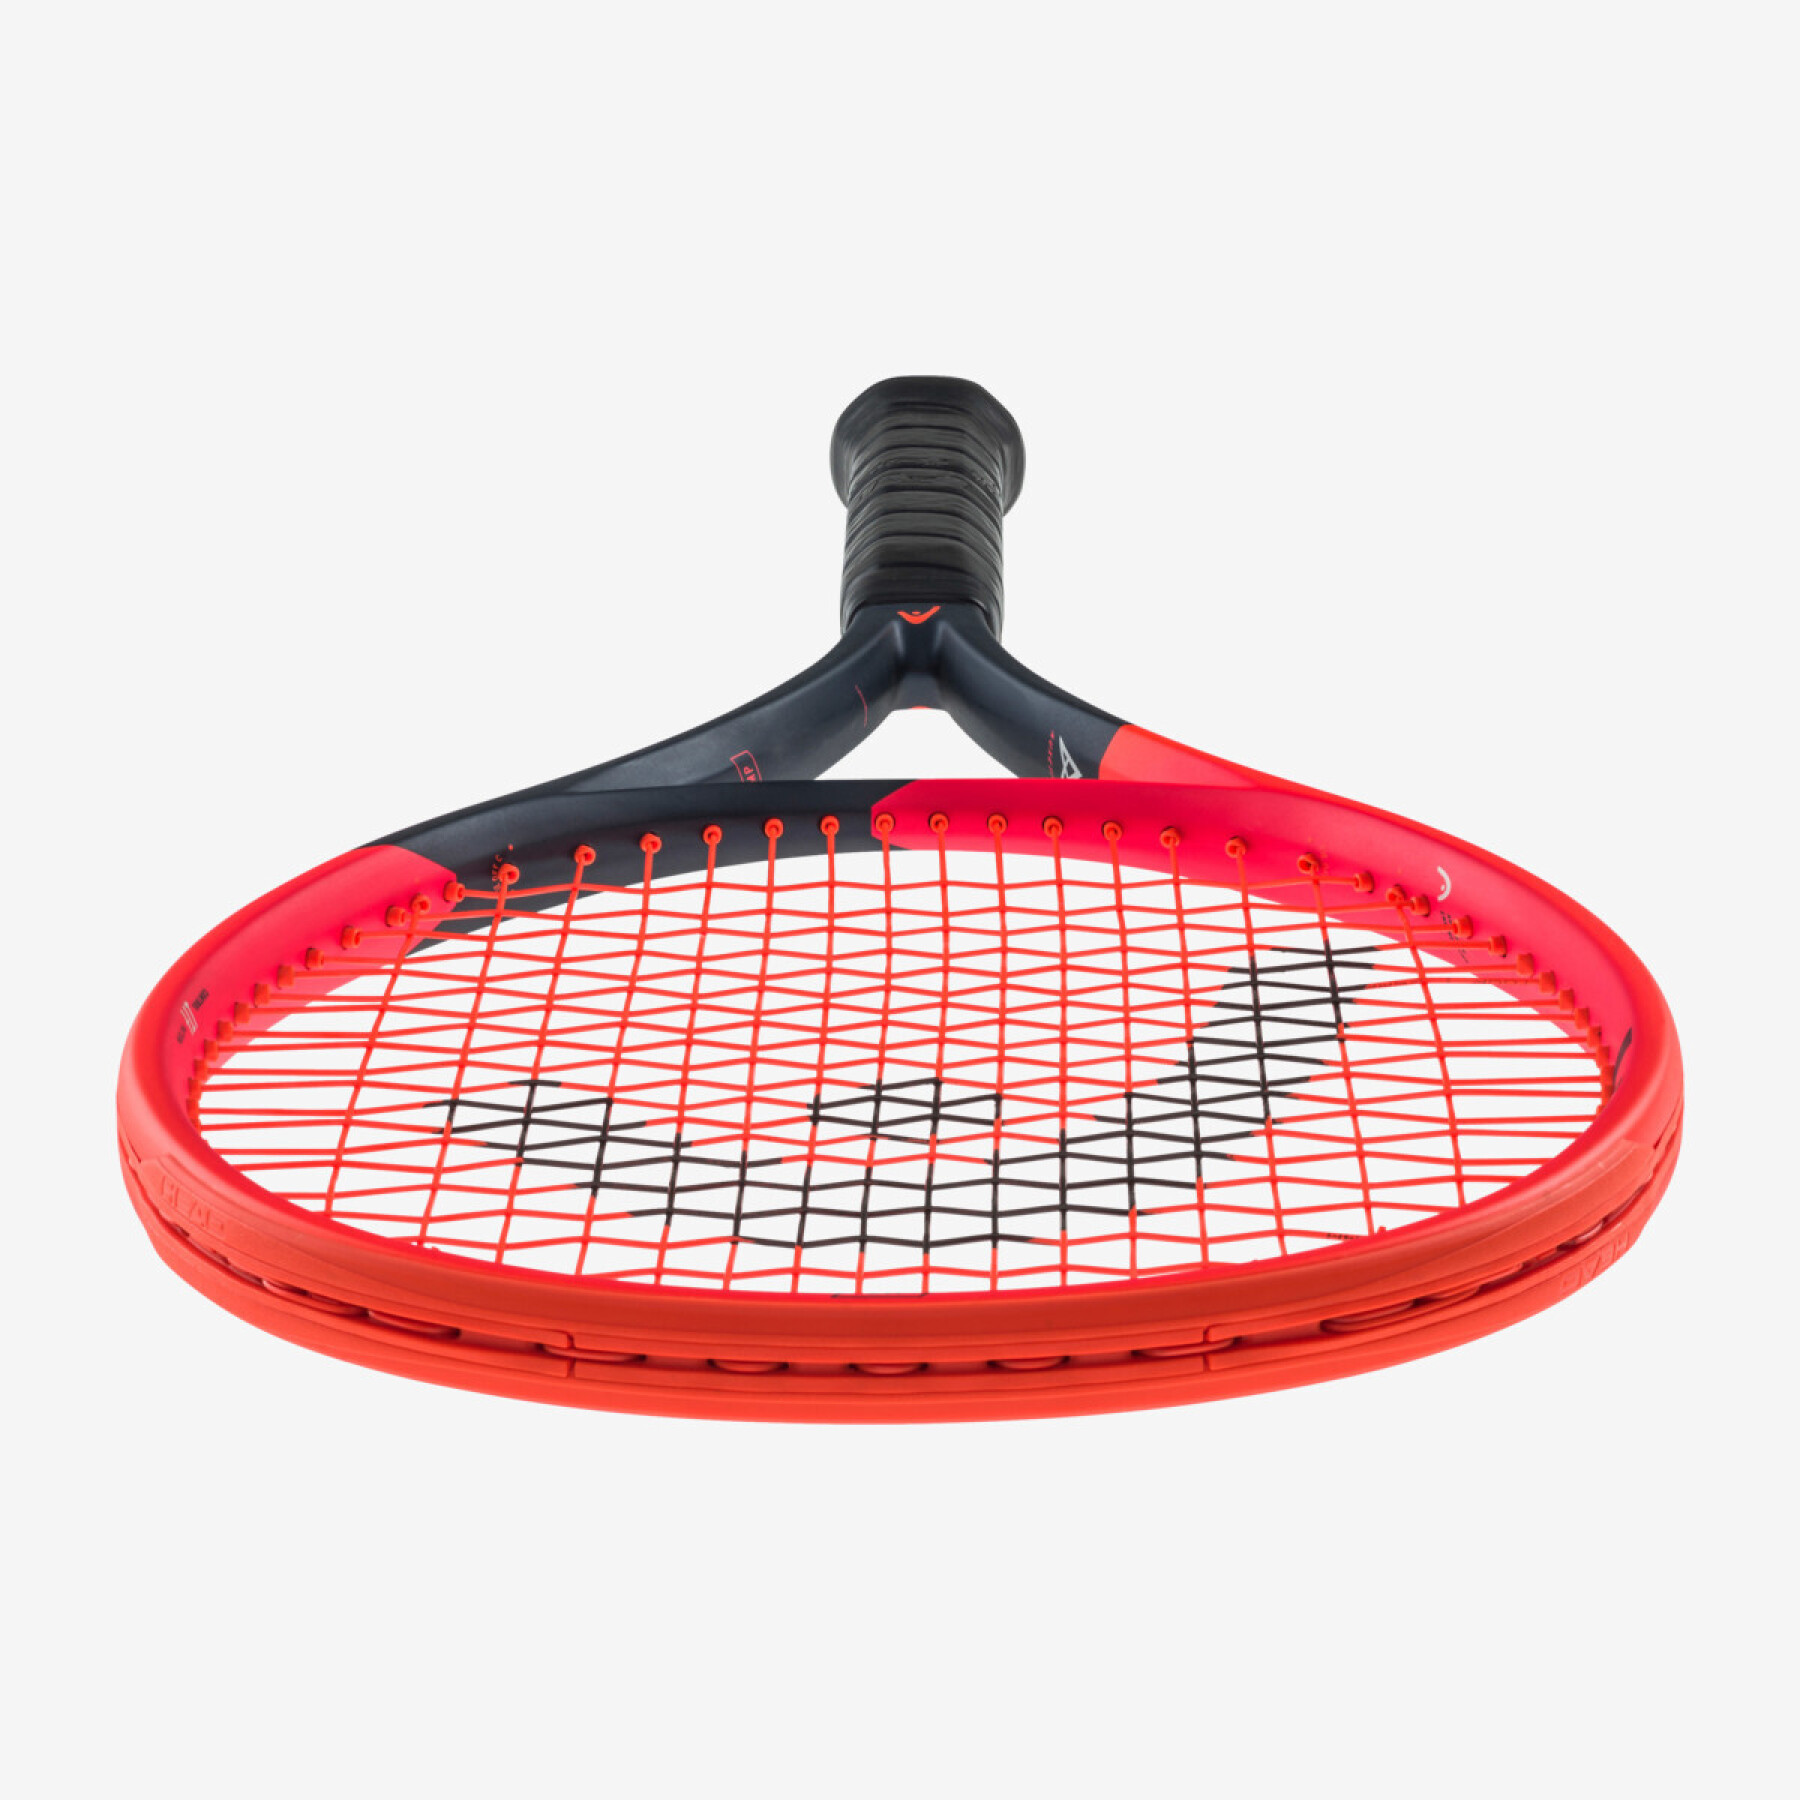 Tennis racket Head Radical MP 2023